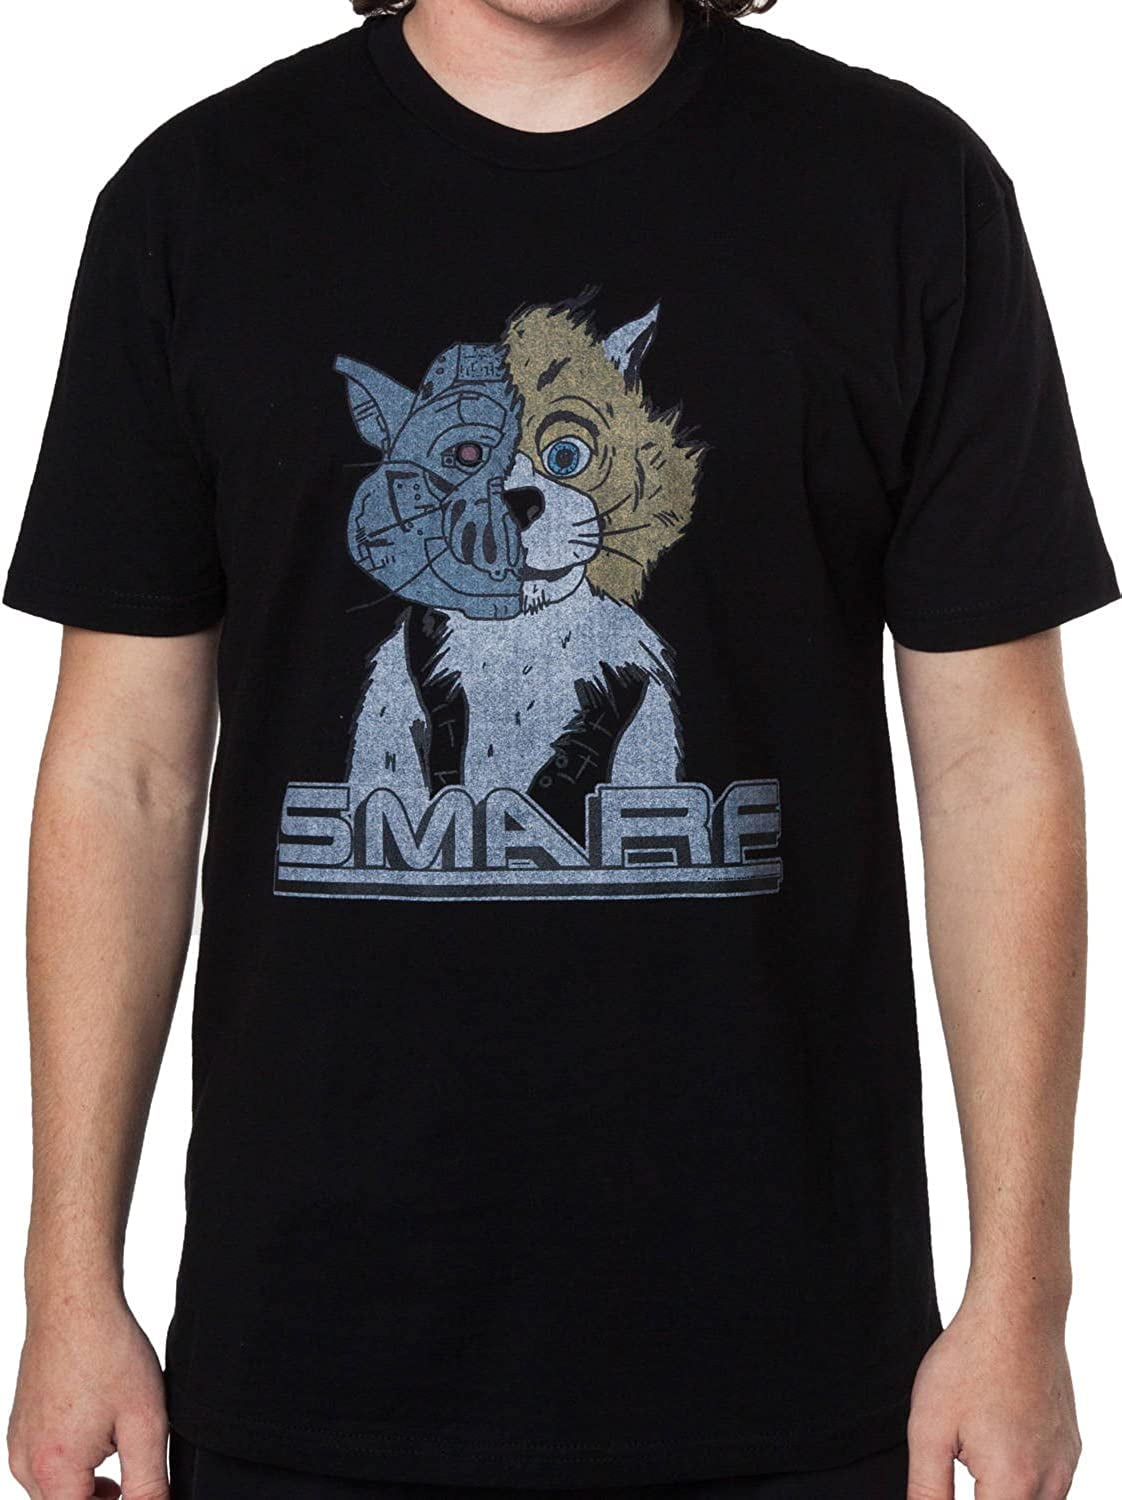 Smarf Too Many Cooks Shirt (Small) - Walmart.com